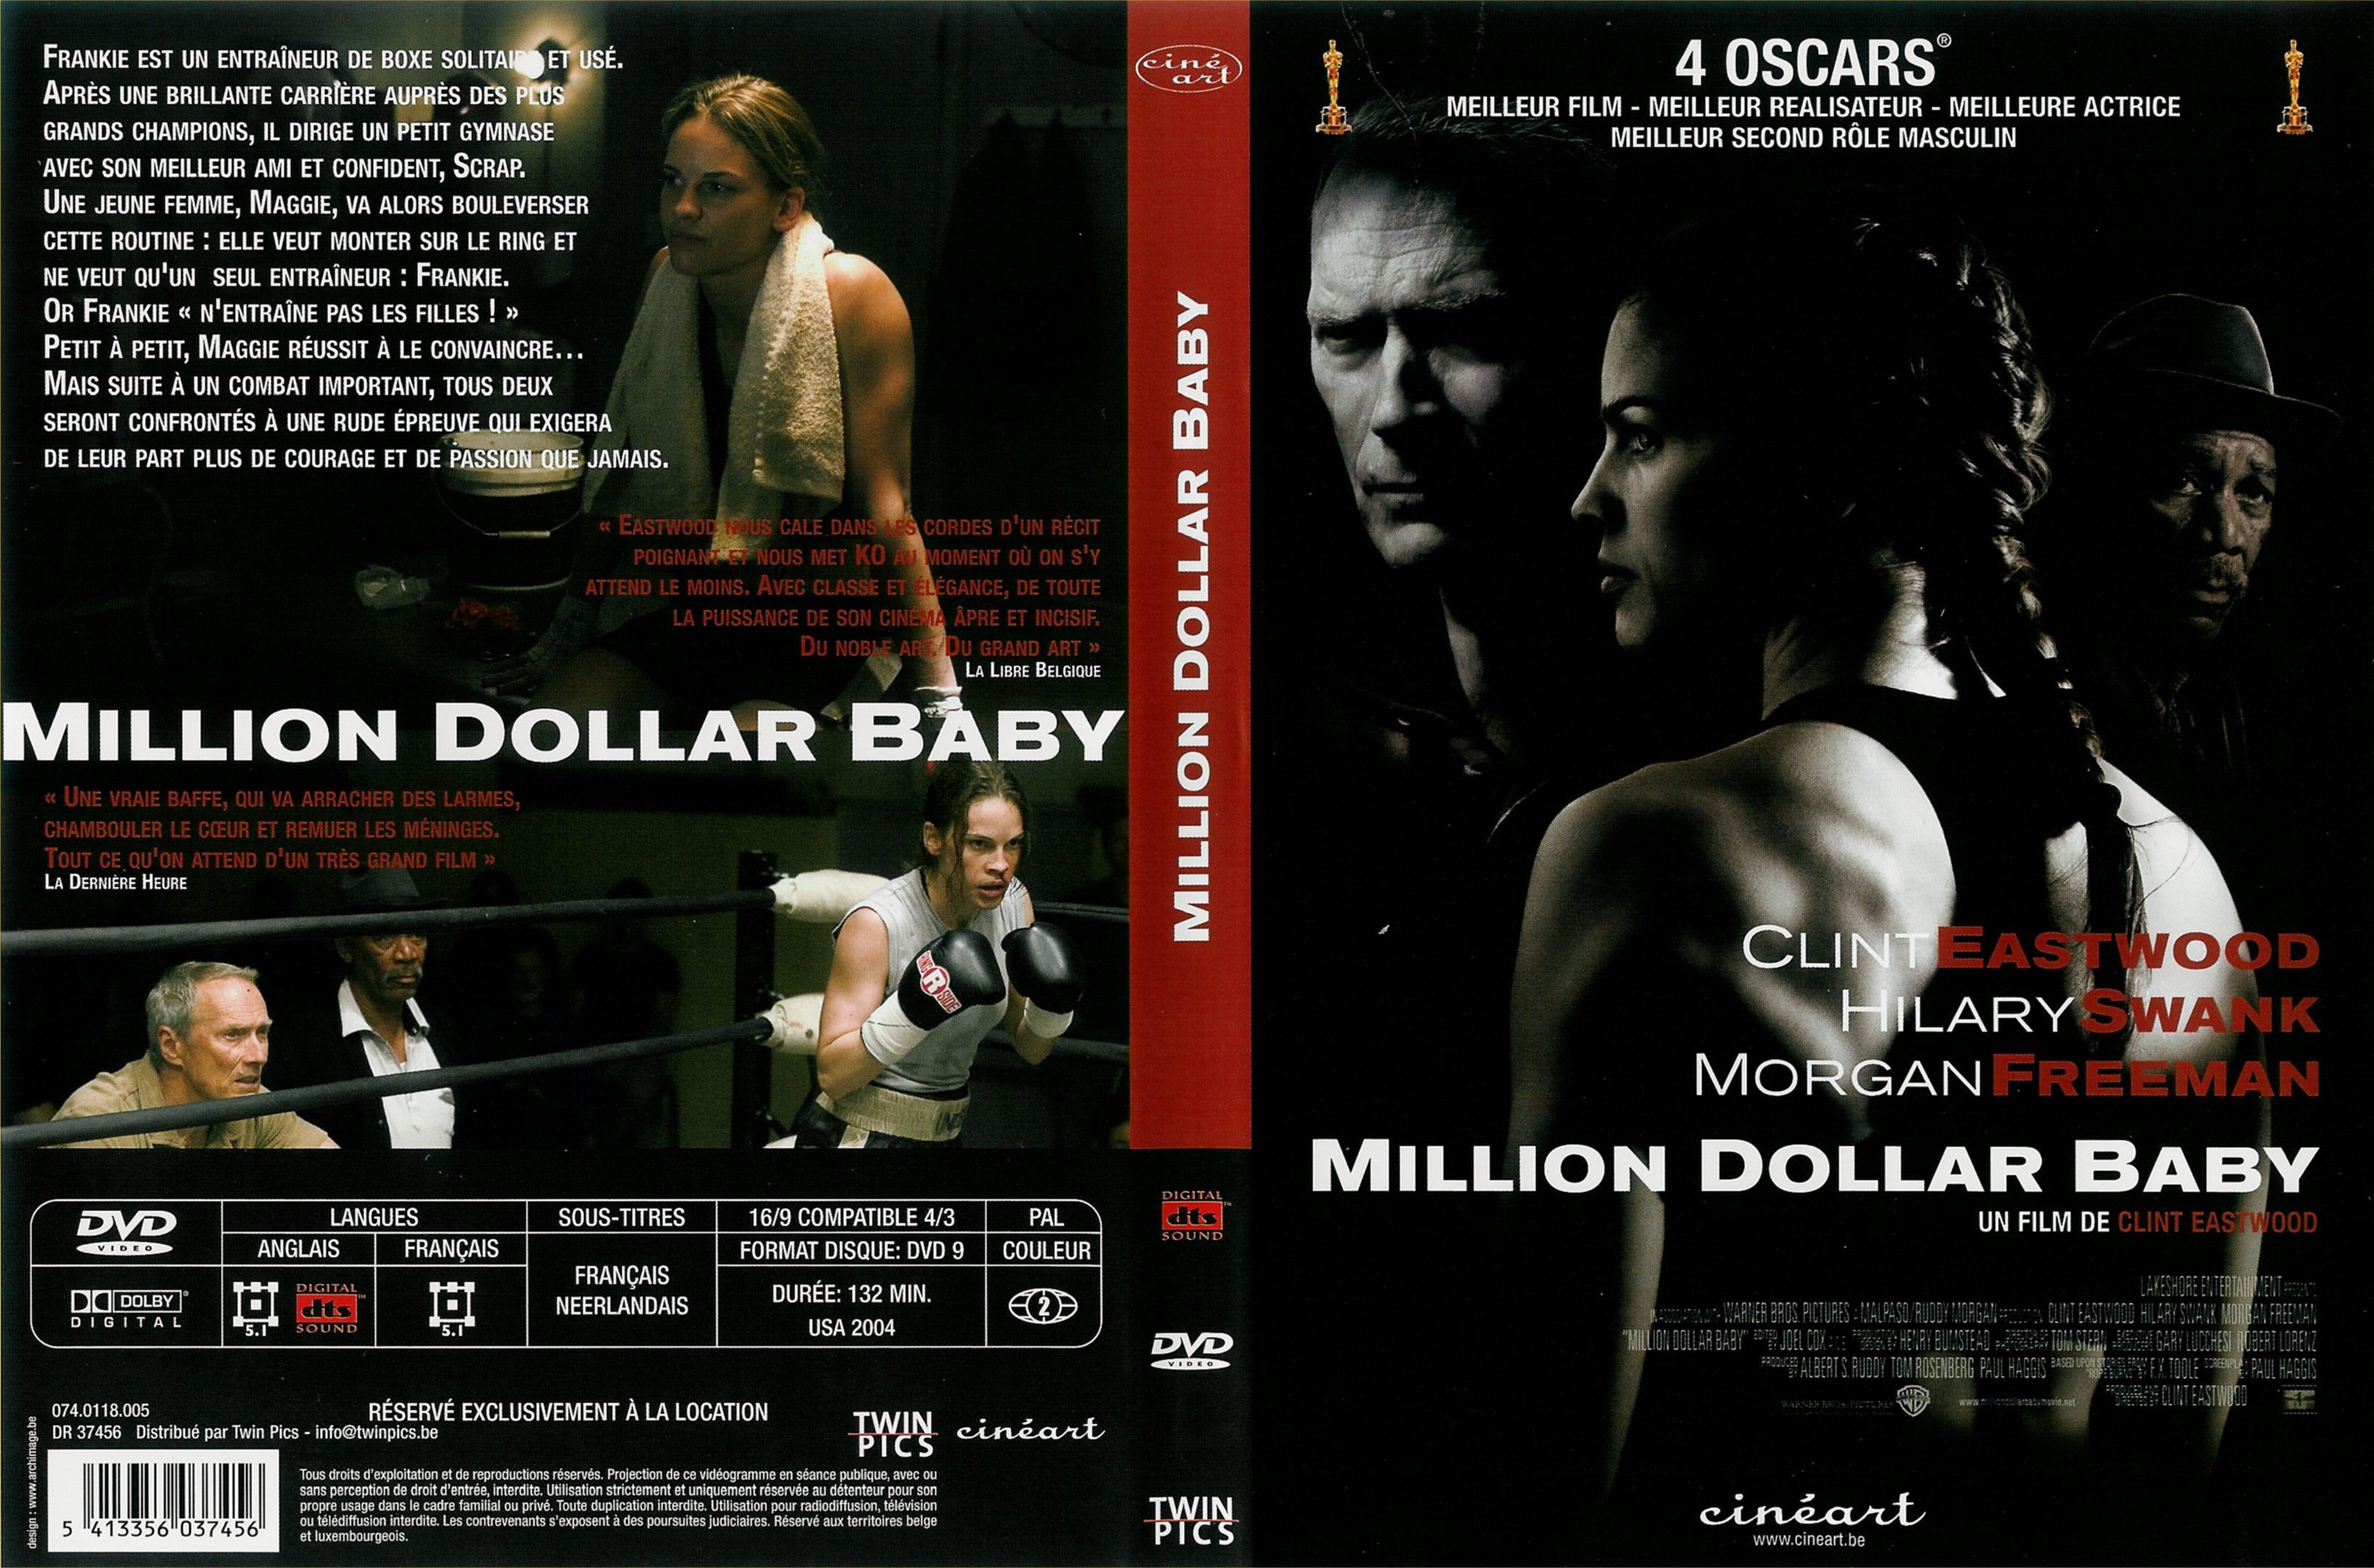 Jaquette DVD Million dollar baby v2